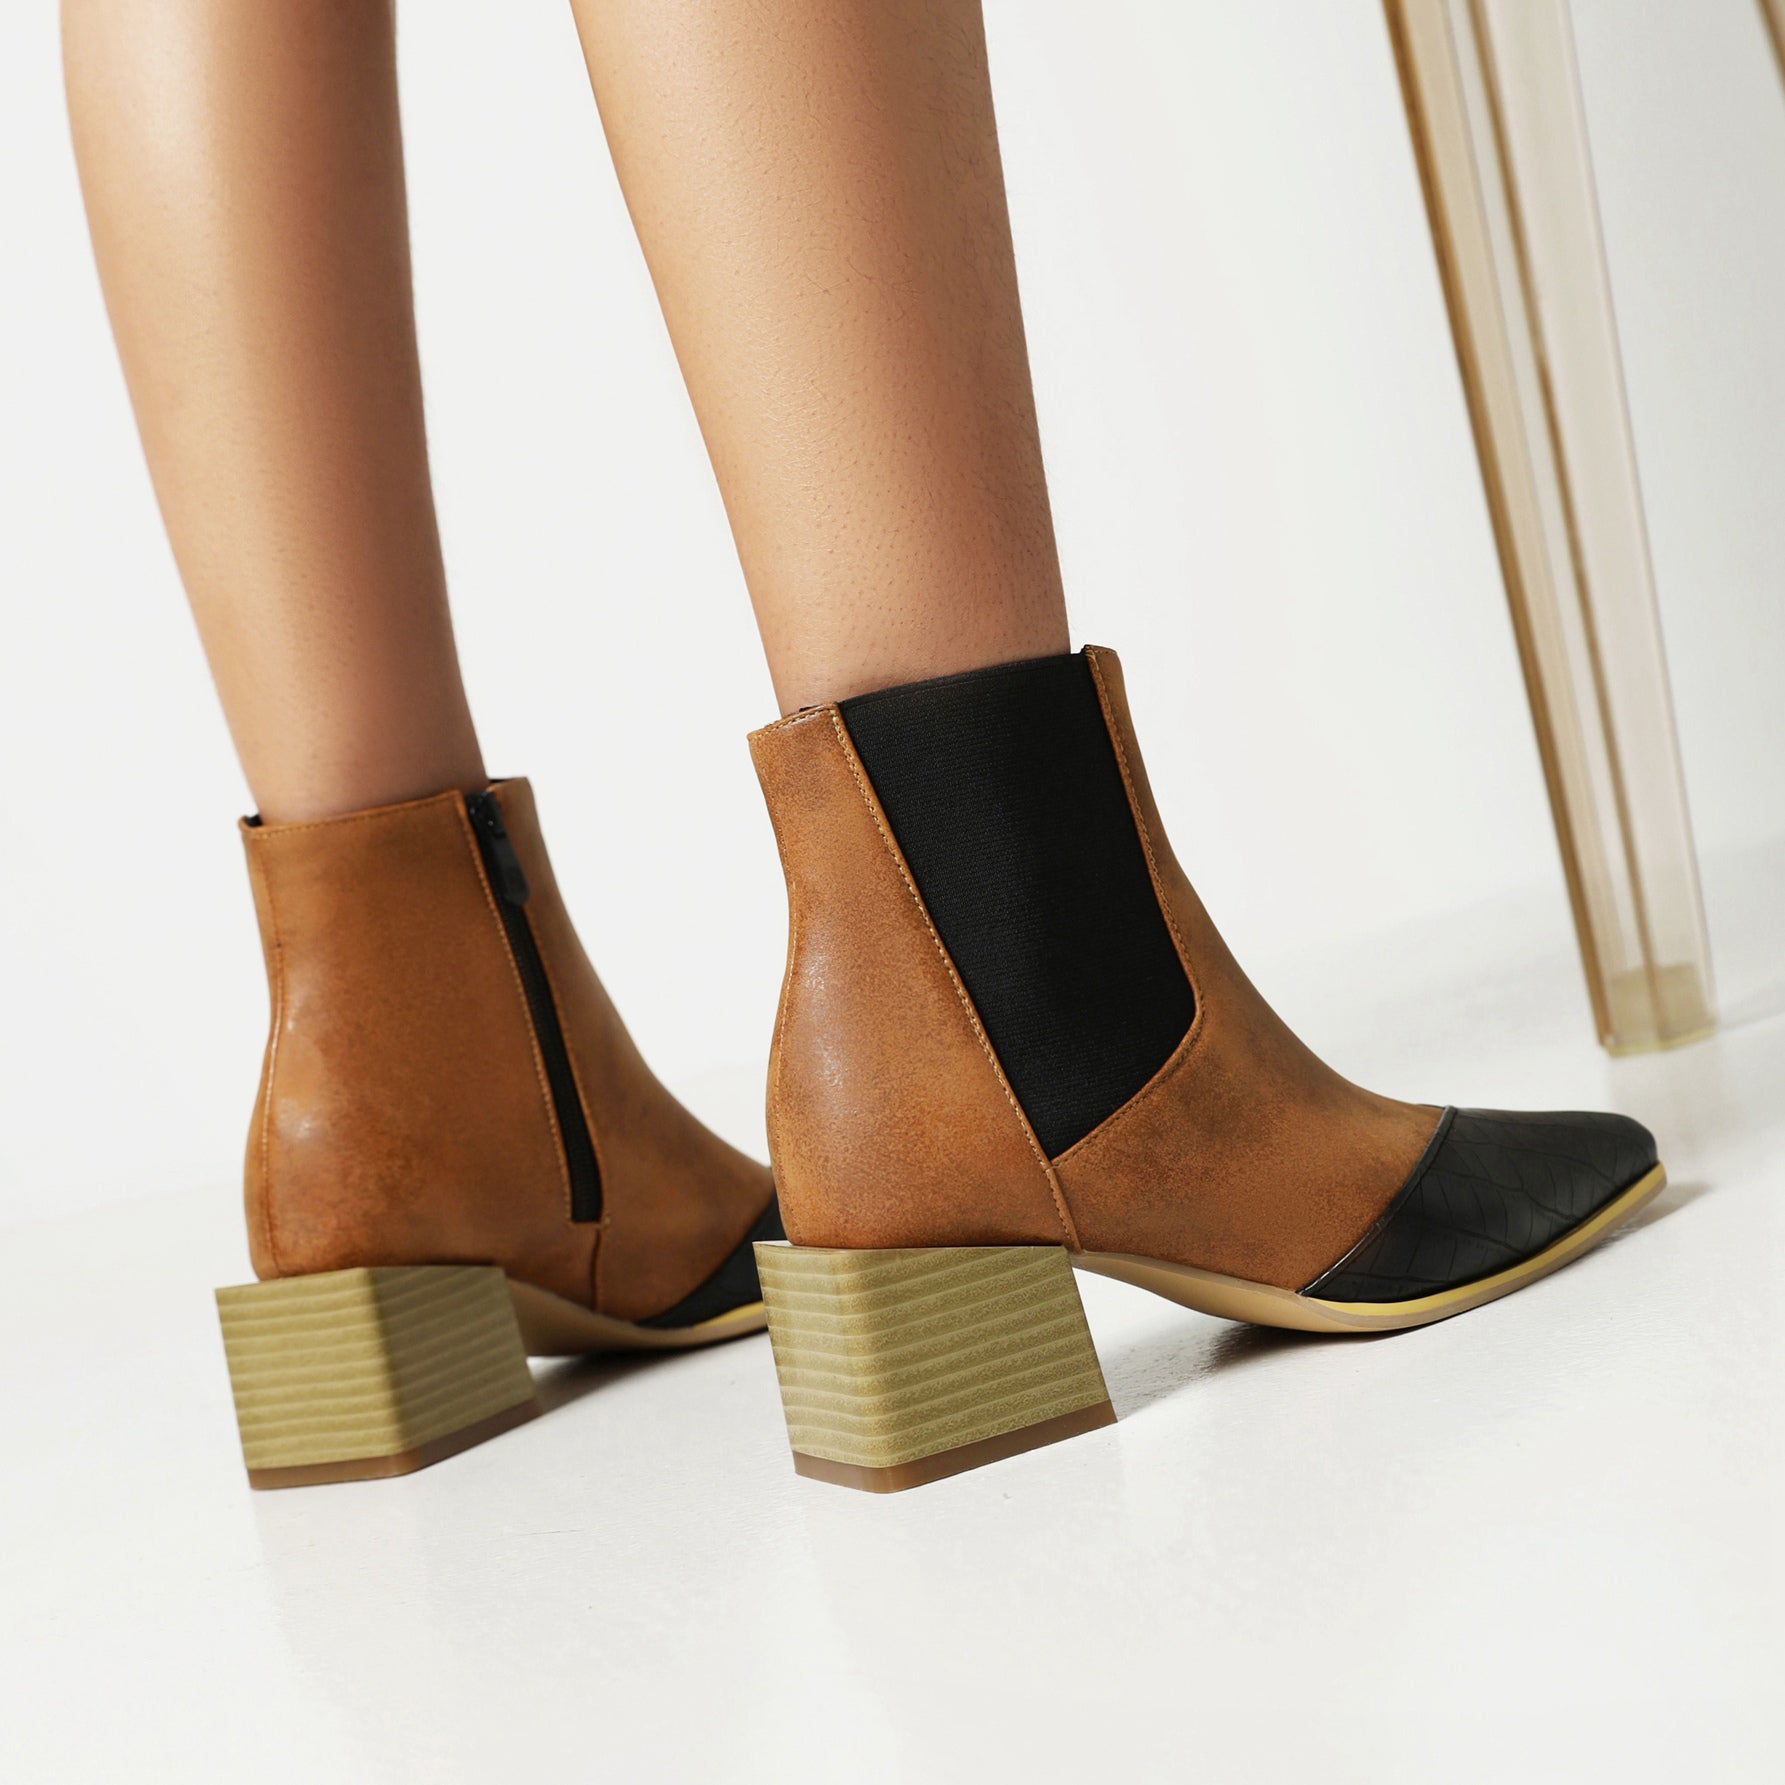 Bigsizeheels Elastic square heel ankle boots - Dark brown freeshipping - bigsizeheel®-size5-size15 -All Plus Sizes Available!